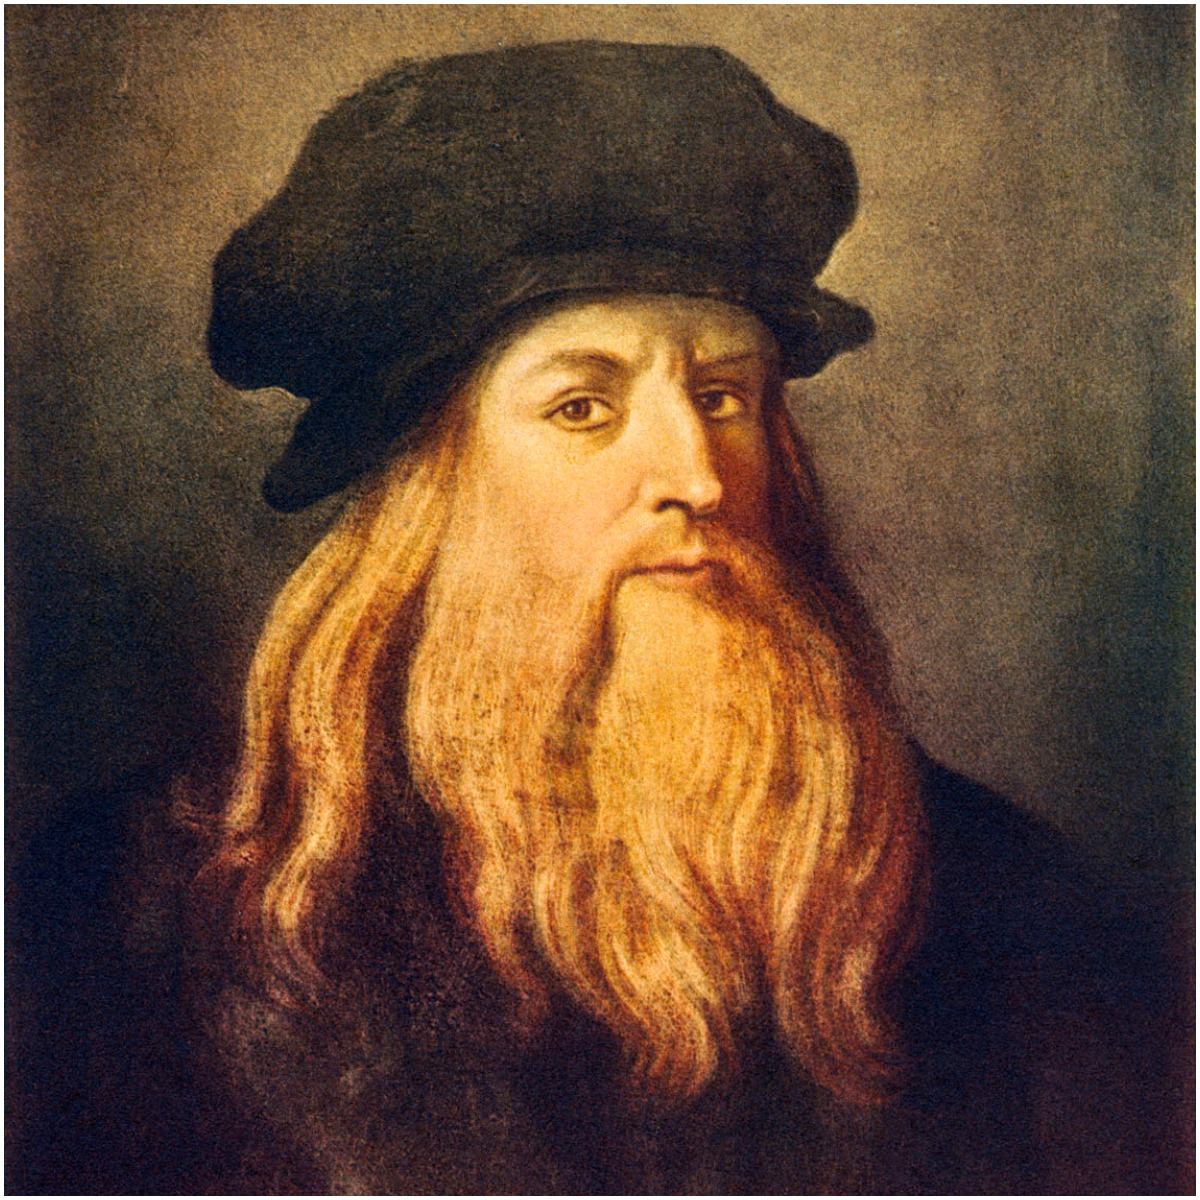 Leonardo da Vinci Quotes